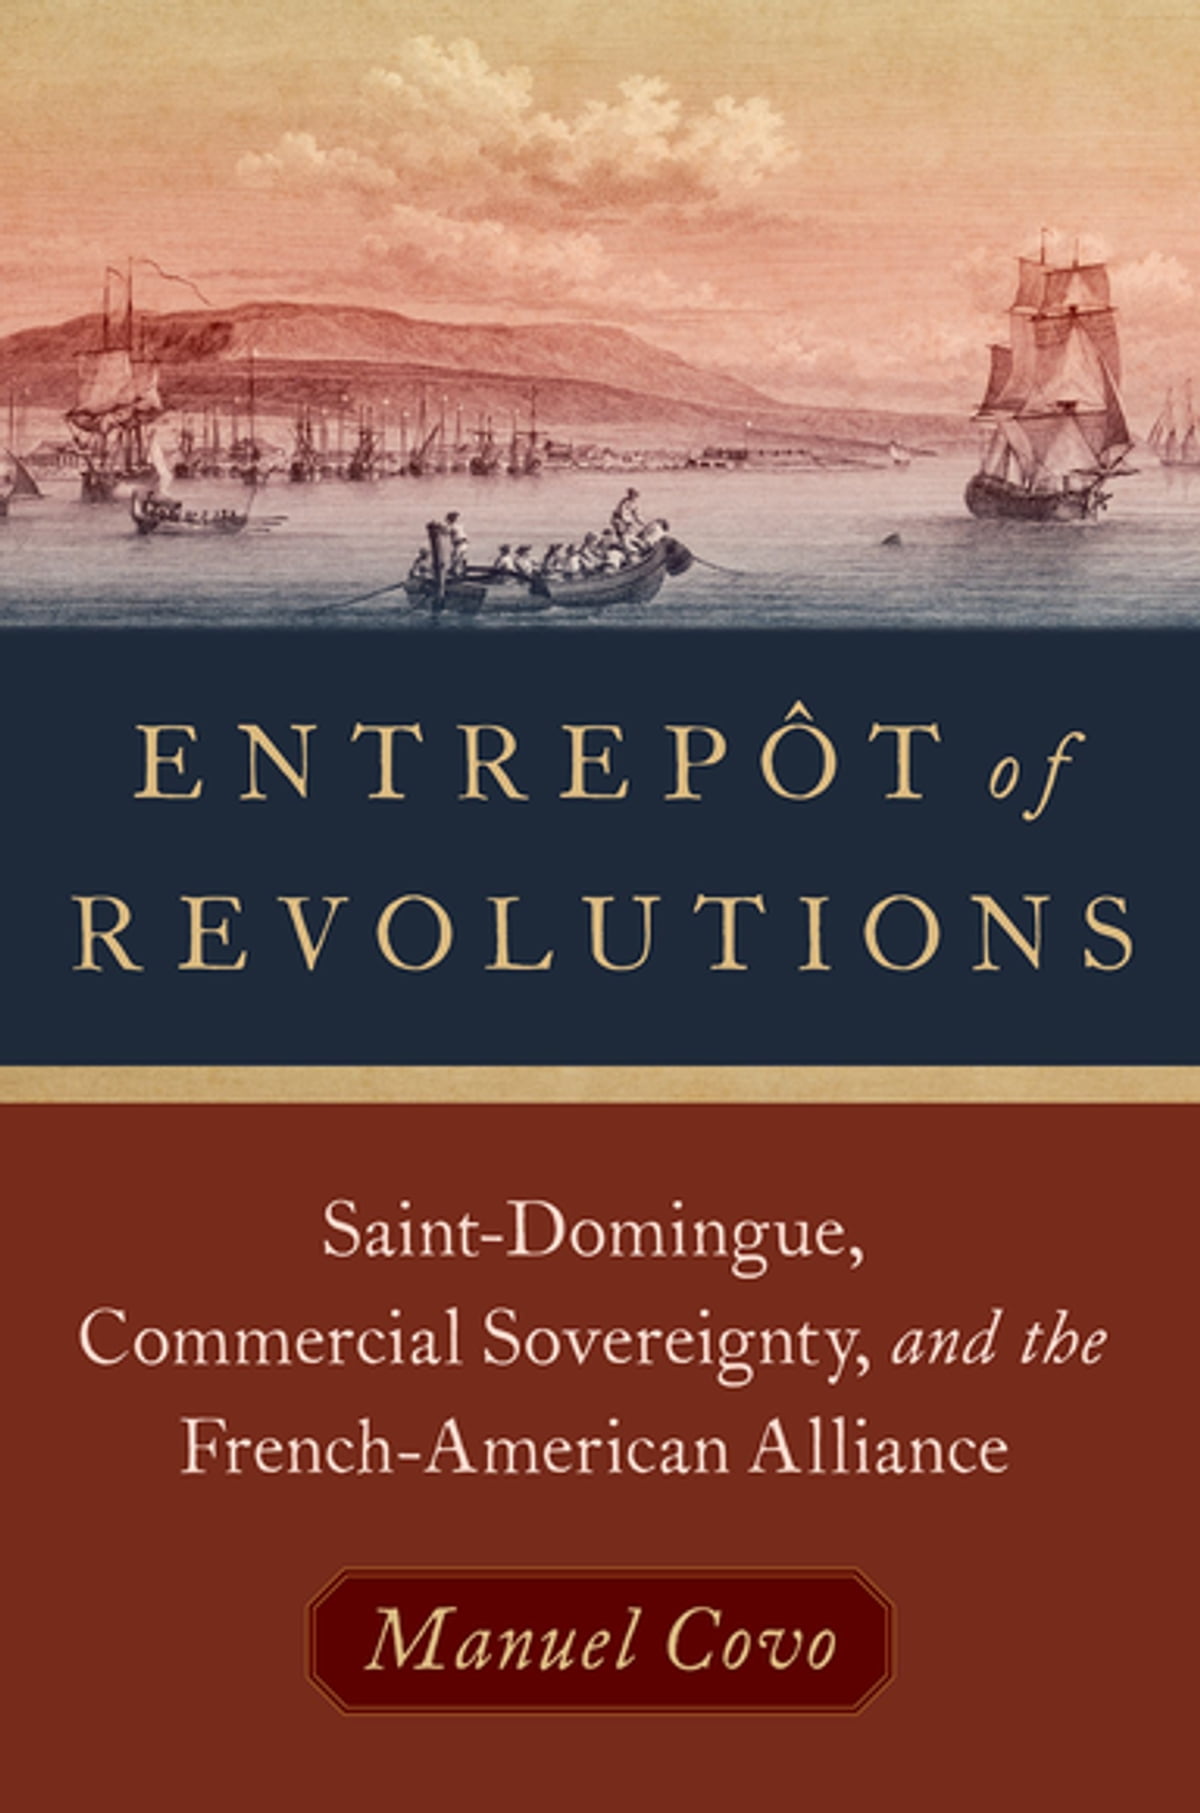 Book cover for 'Entrepôt of Revolutions' by Manuel Covo